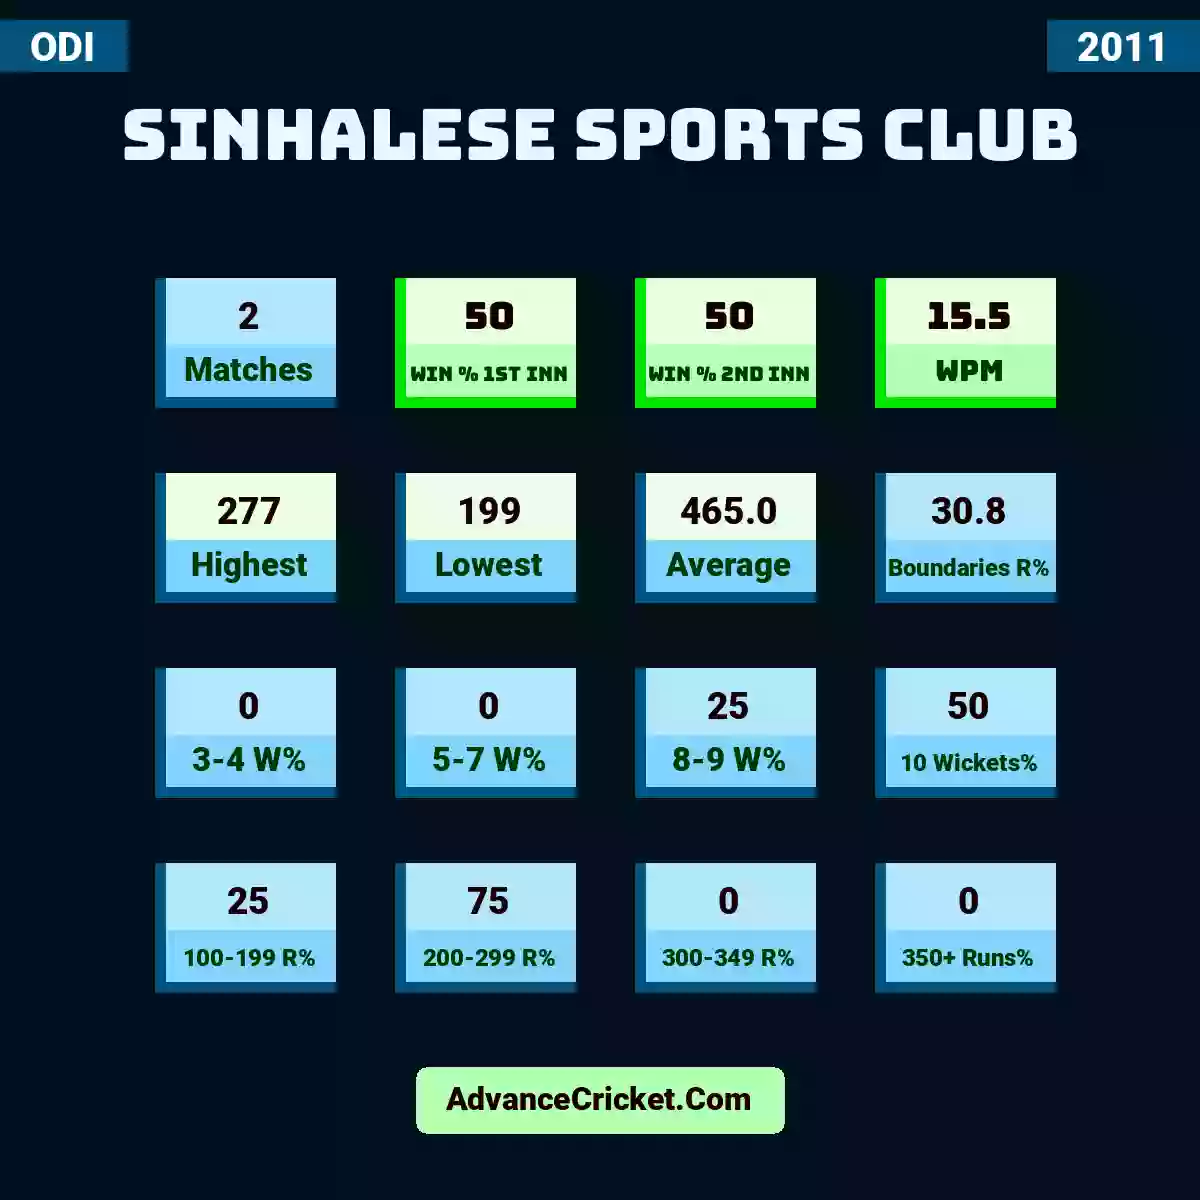 Image showing Sinhalese Sports Club with Matches: 2, Win % 1st Inn: 50, Win % 2nd Inn: 50, WPM: 15.5, Highest: 277, Lowest: 199, Average: 465.0, Boundaries R%: 30.8, 3-4 W%: 0, 5-7 W%: 0, 8-9 W%: 25, 10 Wickets%: 50, 100-199 R%: 25, 200-299 R%: 75, 300-349 R%: 0, 350+ Runs%: 0.